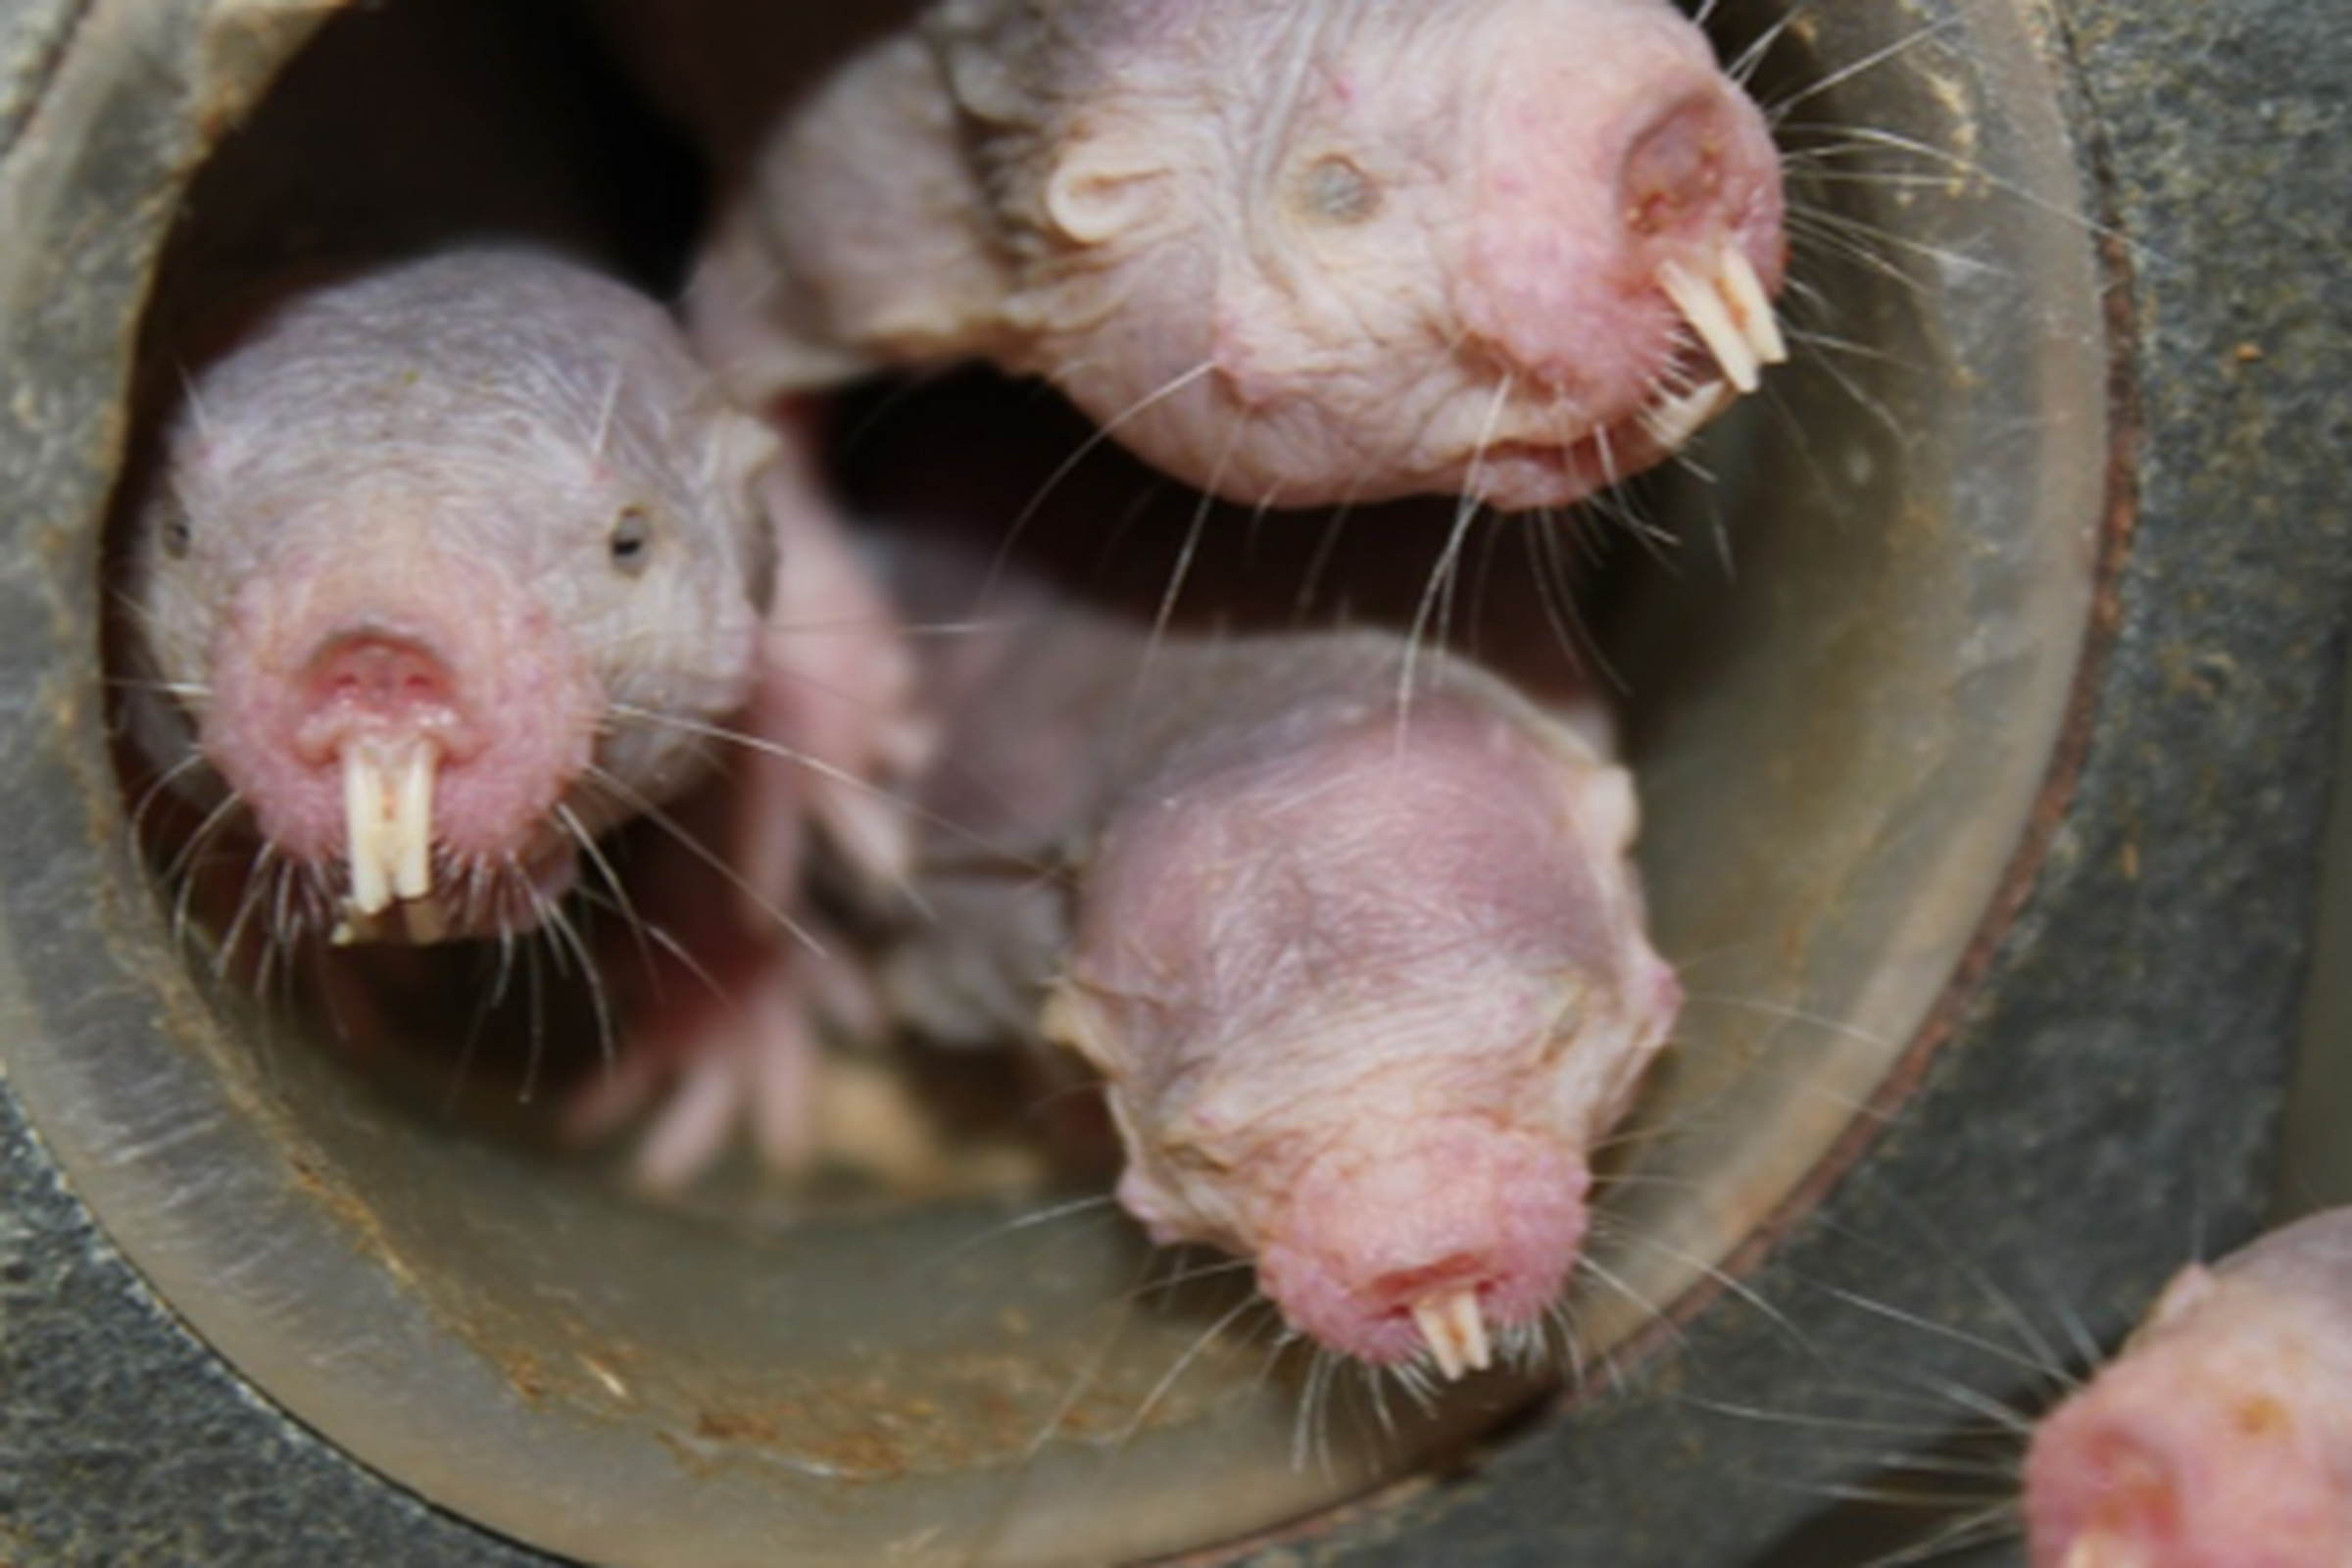 mole rats in tube